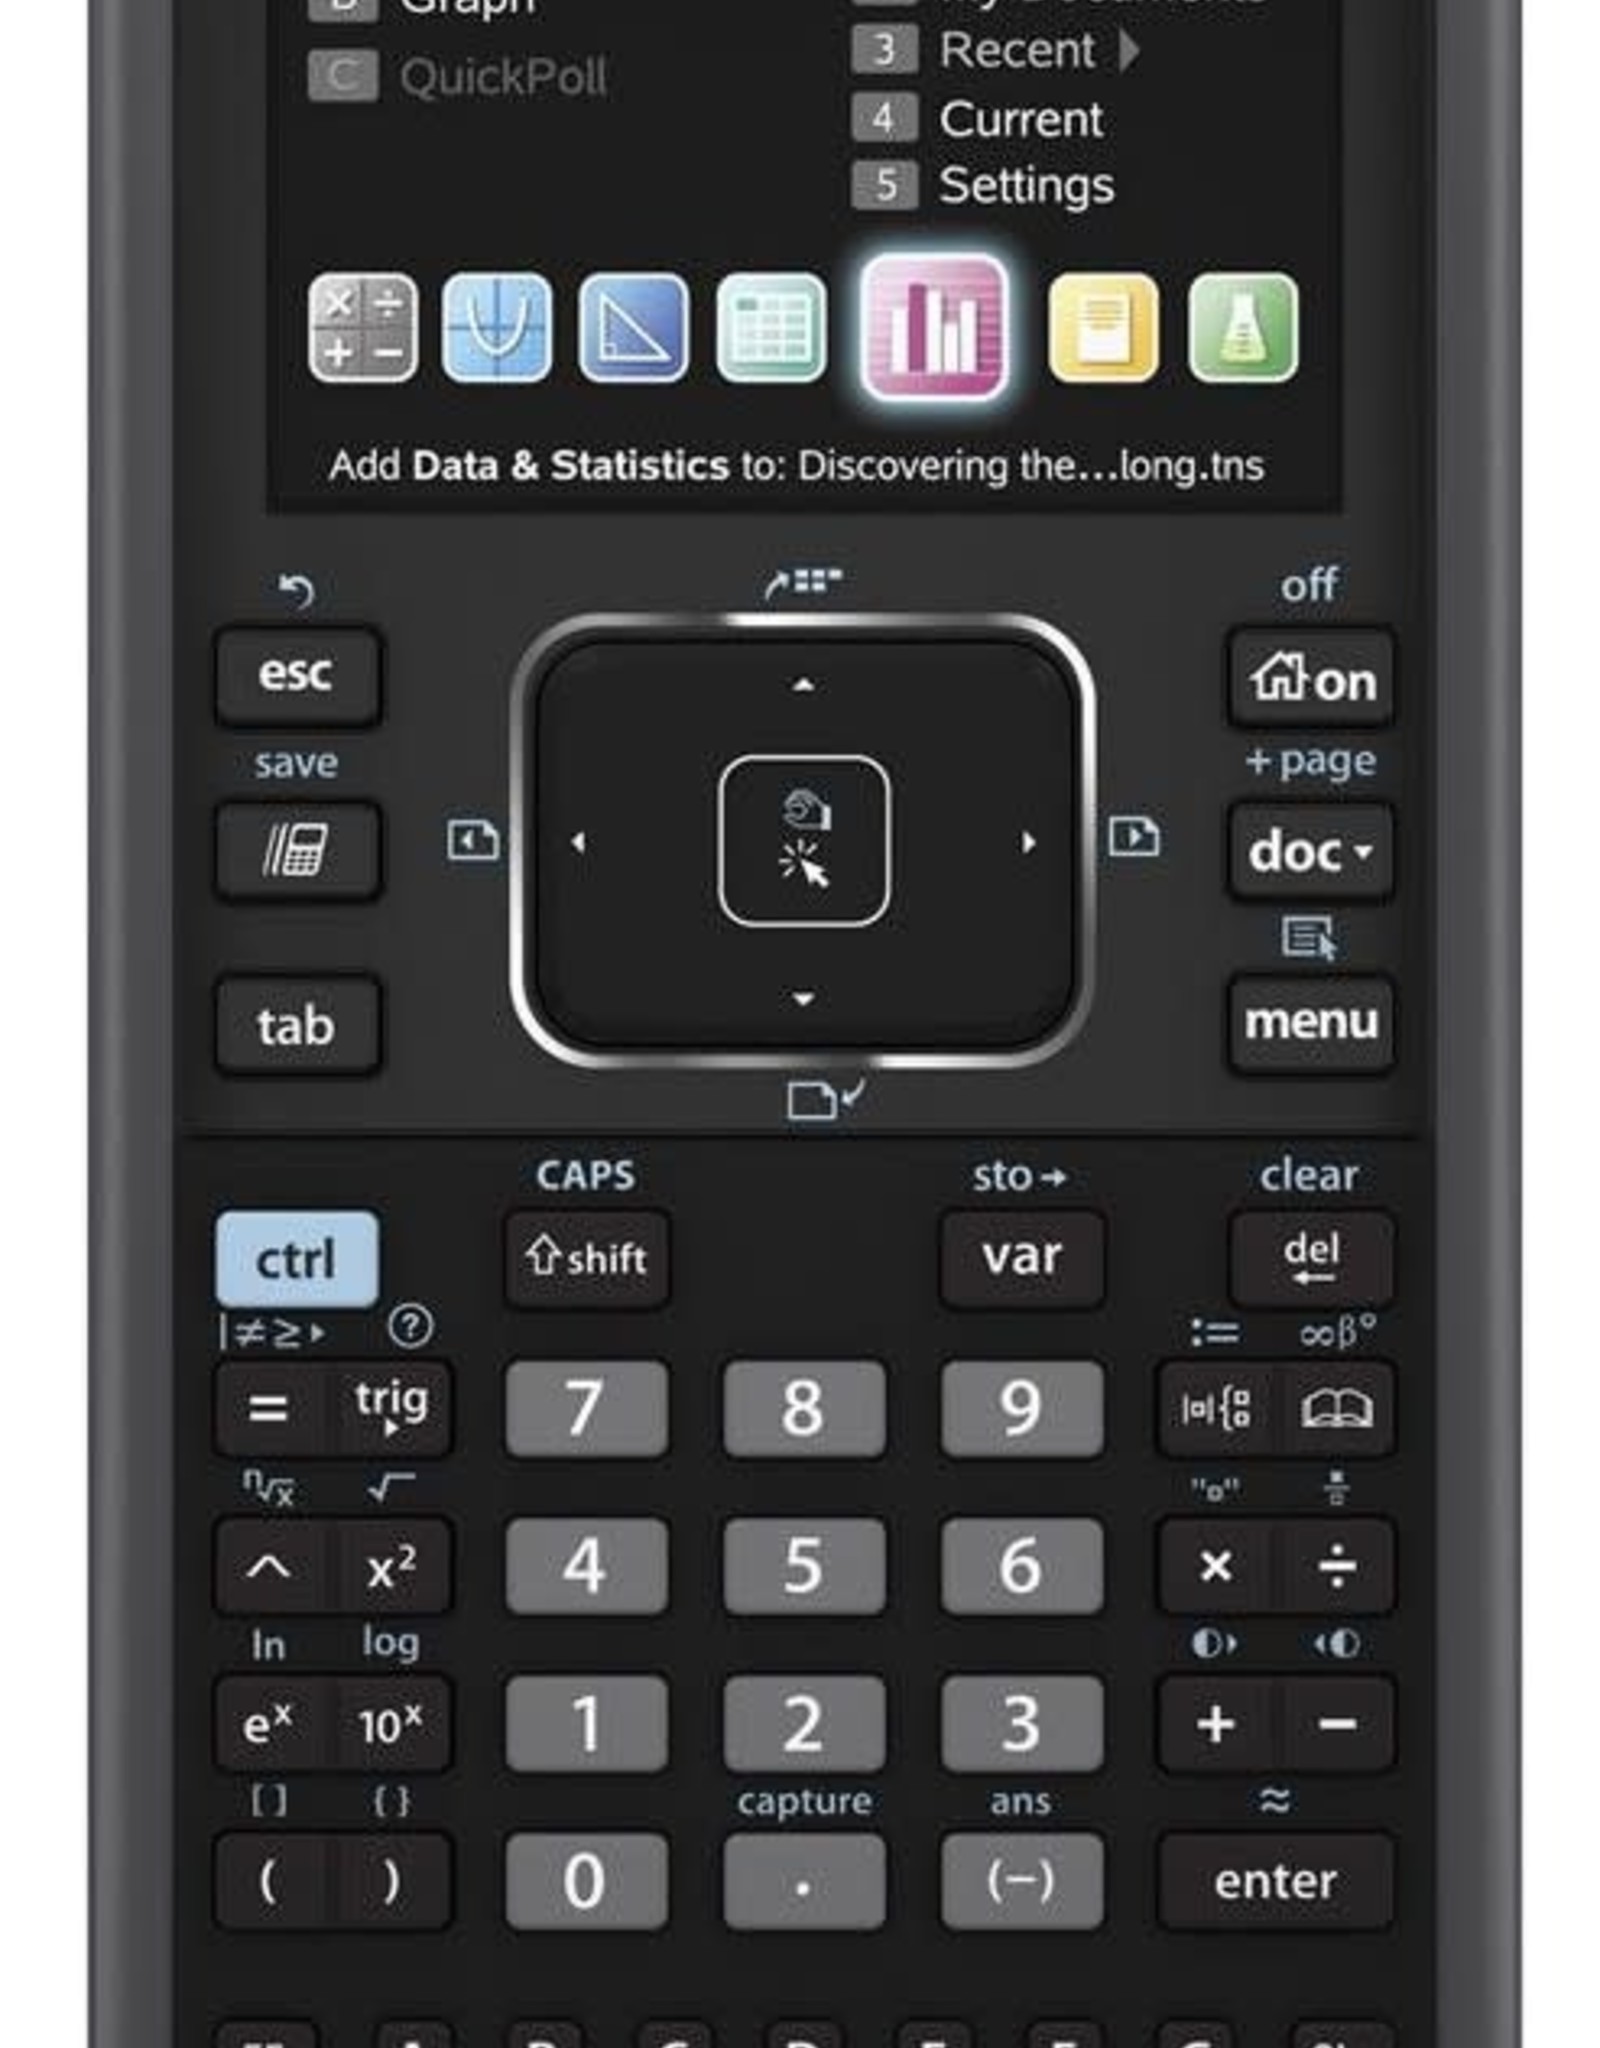 Calculator TI-Nspire CX CAS